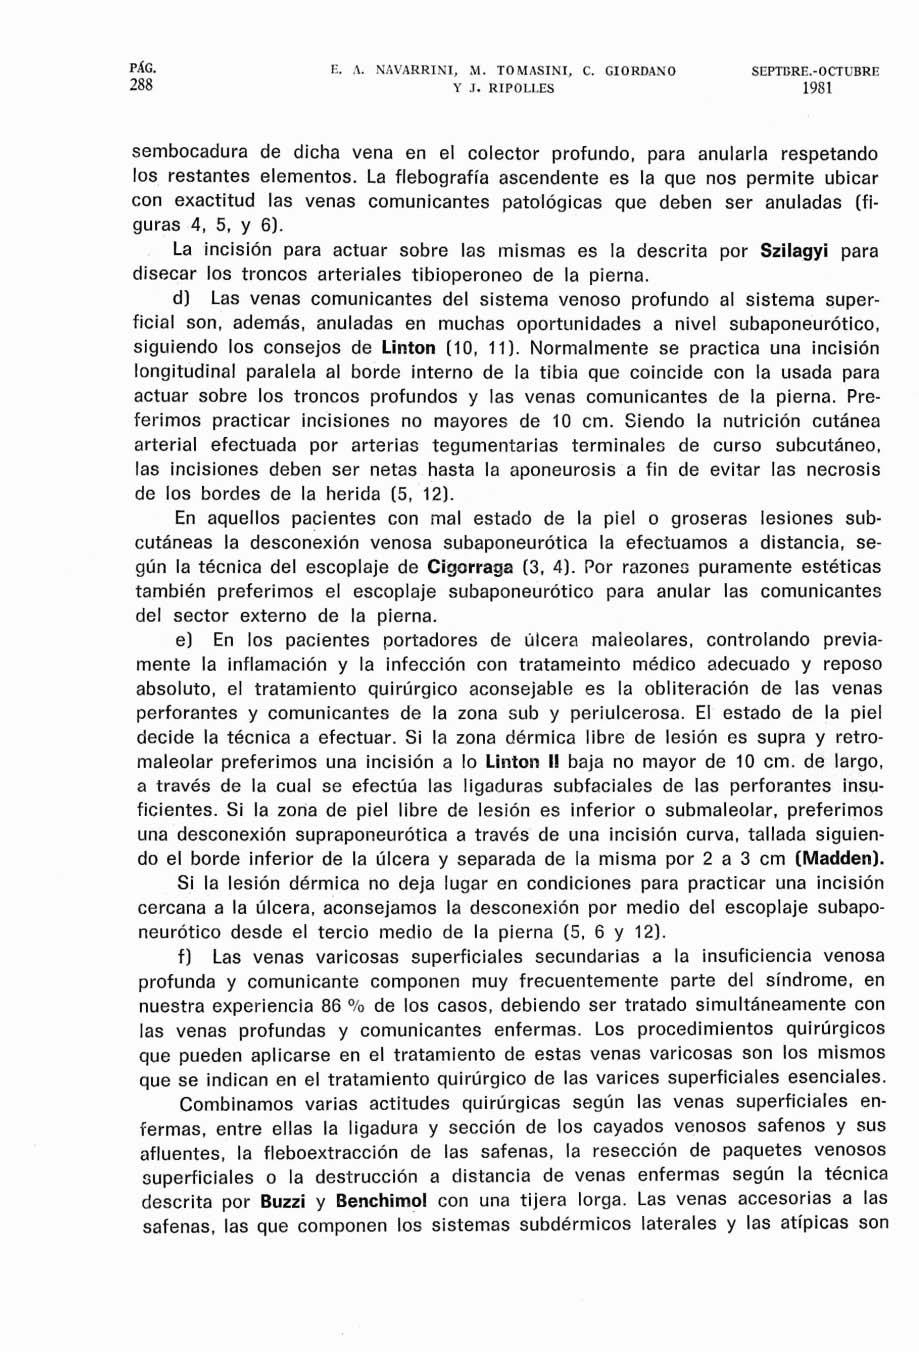 E. A. NAVARRINI, M. TOMASINI, C. CIORDANO SEPTERE.-OCTUBRE Y J. RIPOLLES 1981 sembocadura de dicha vena en el colector profundo, para anularla respetando los restantes elementos.